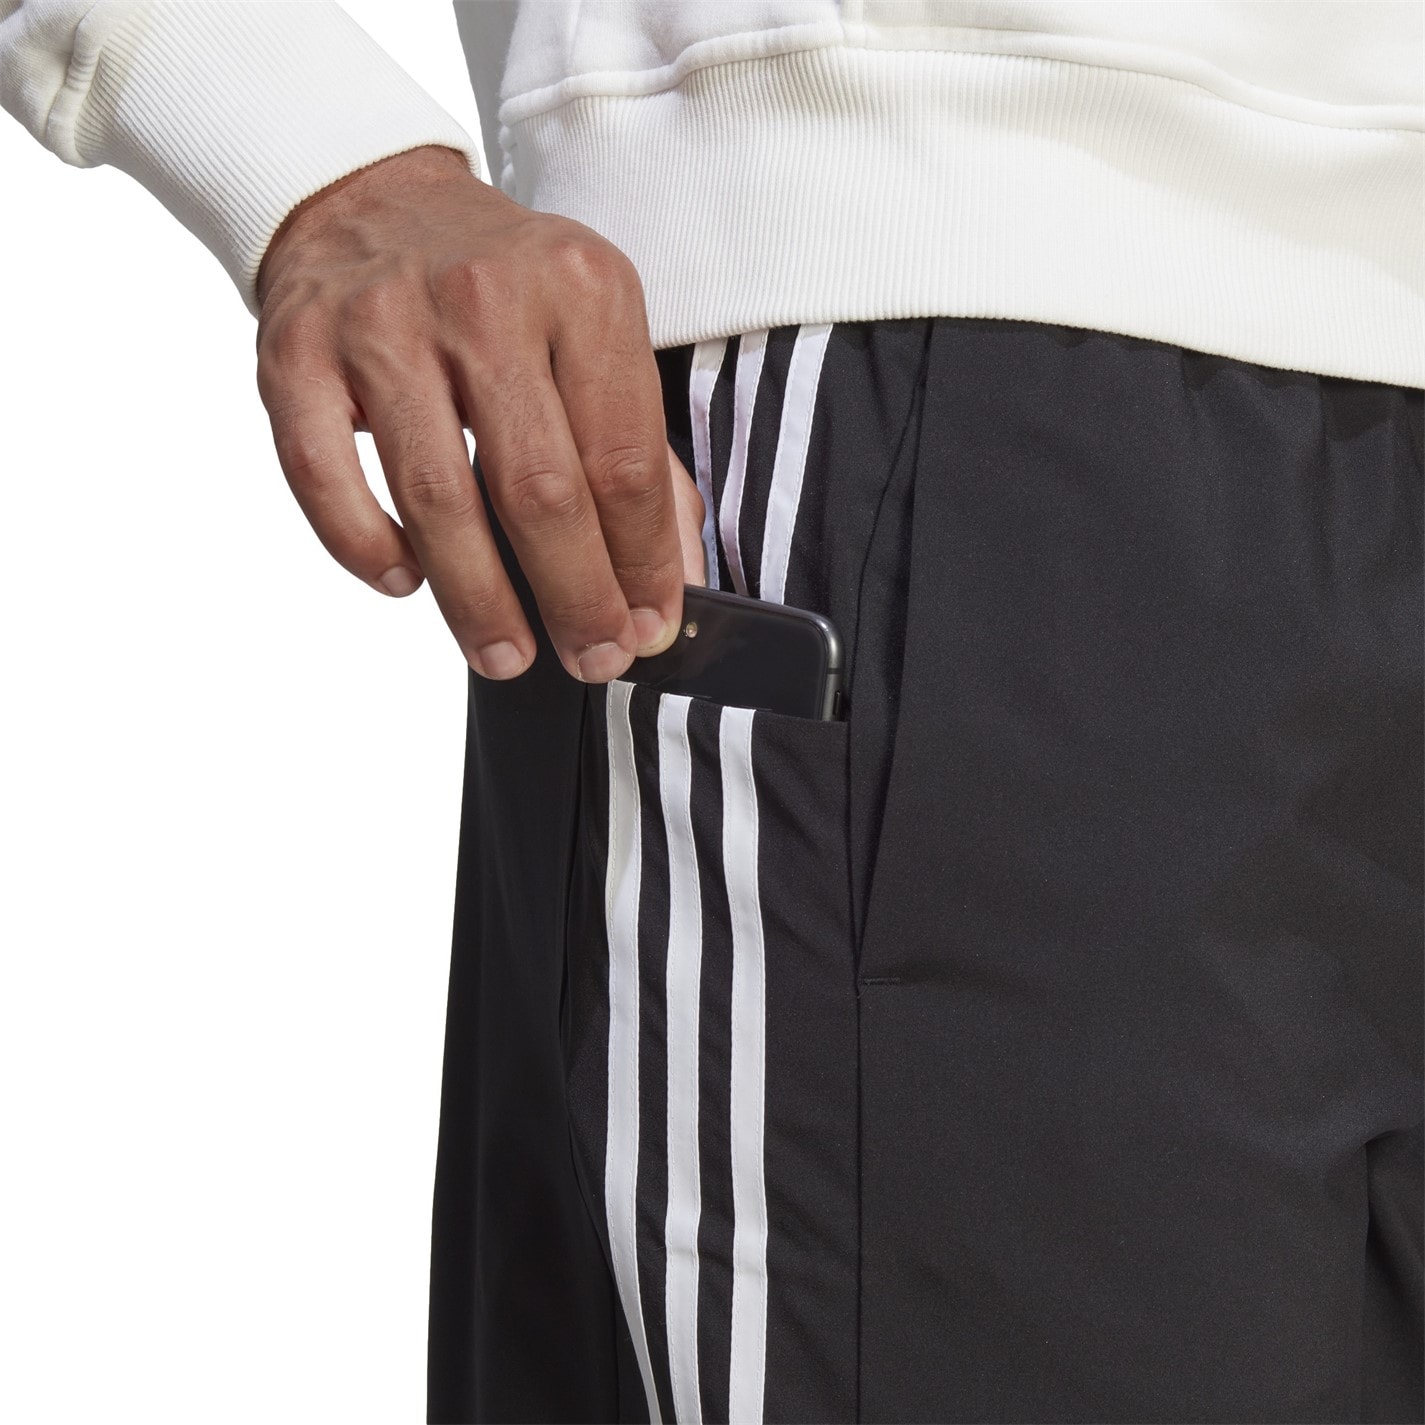 Pantalon scurt Combat adidas 3-Stripes barbat